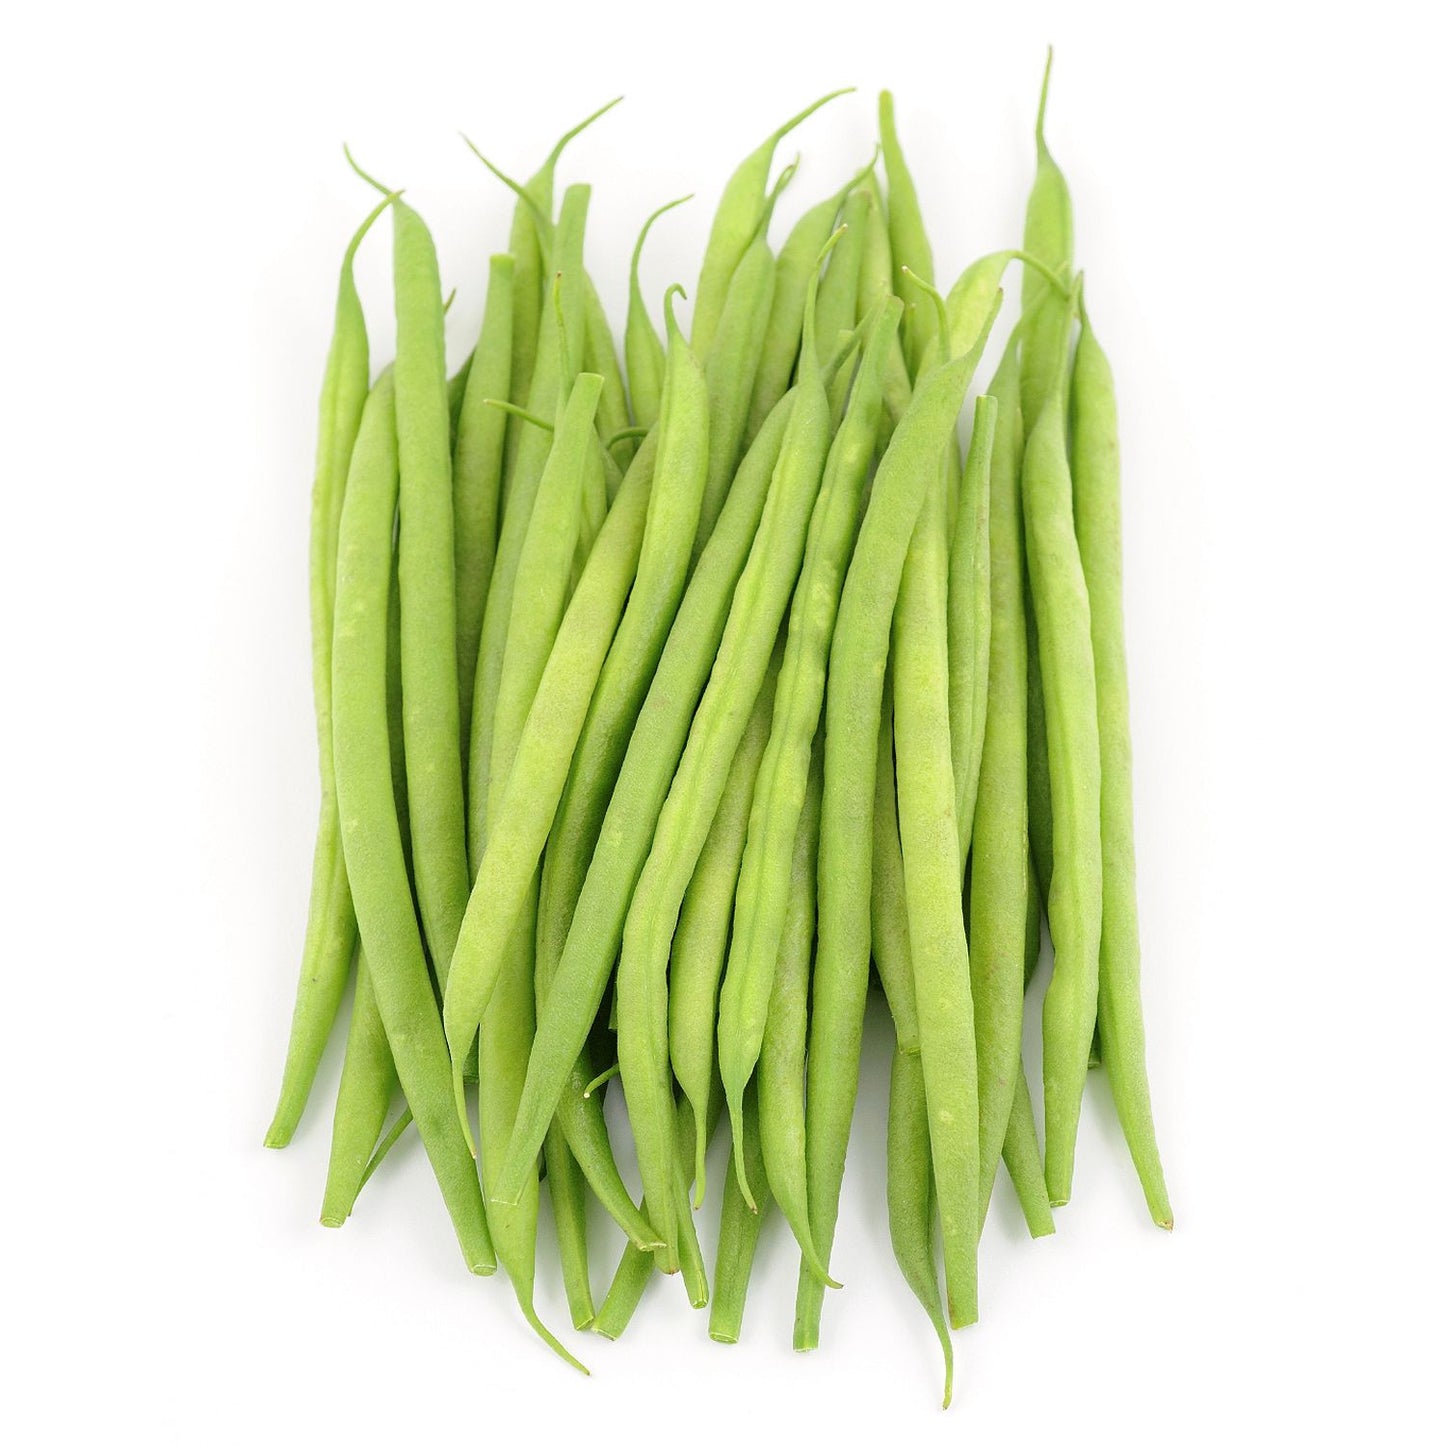 Organic Green Beans (2 lbs.)